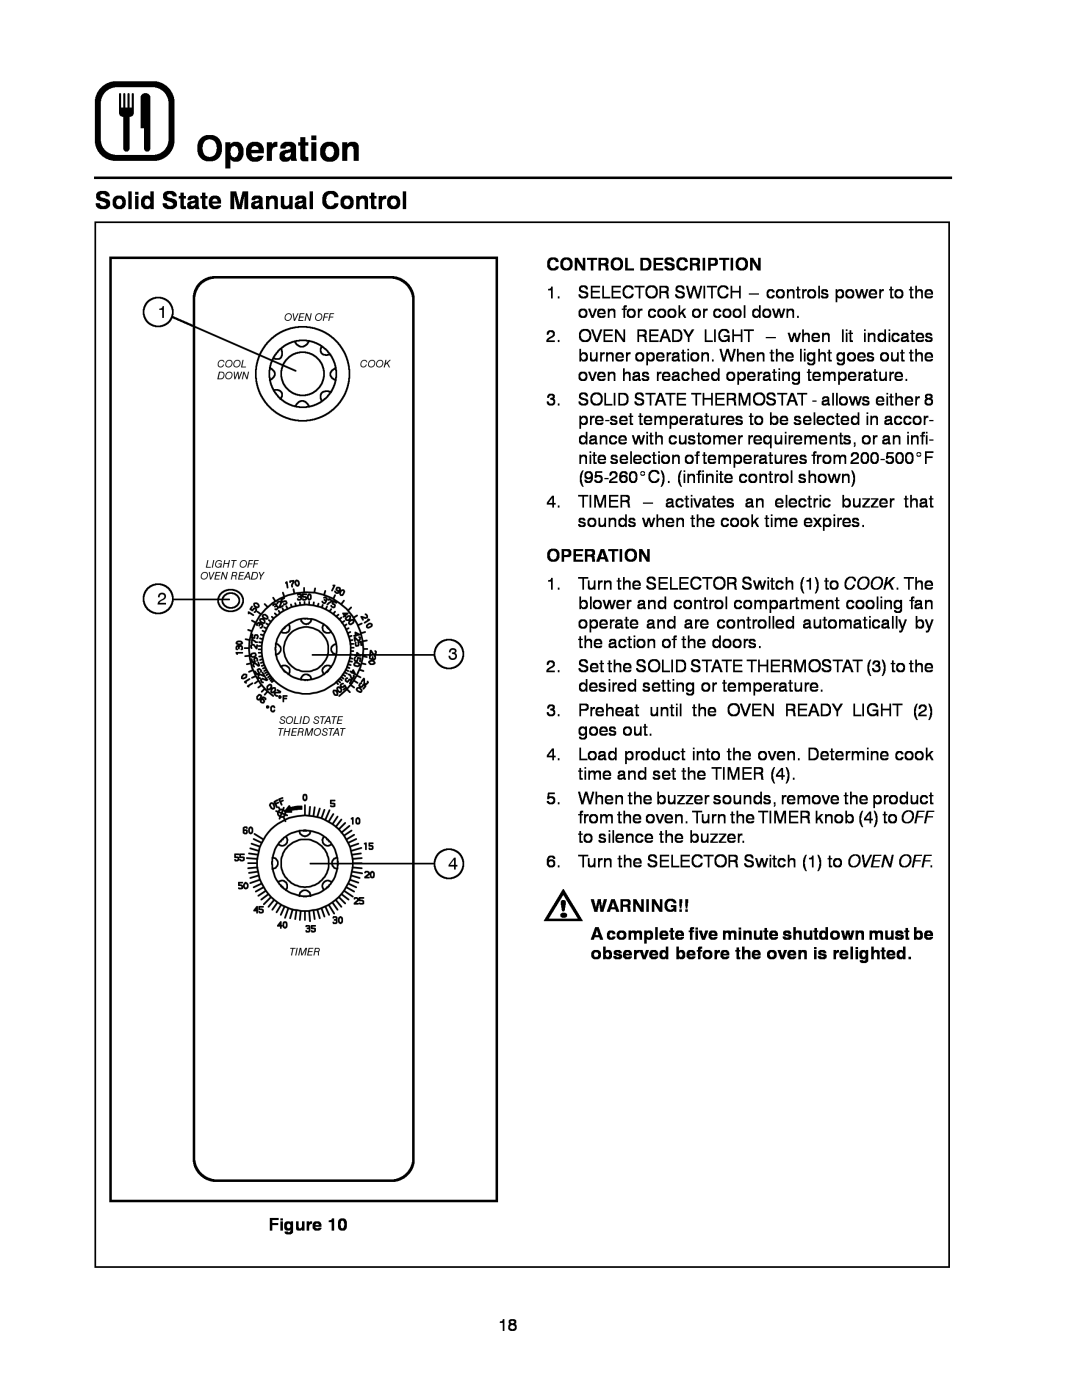 Blodgett DFG-50 manual Solid State Manual Control, Operation, Control Description 